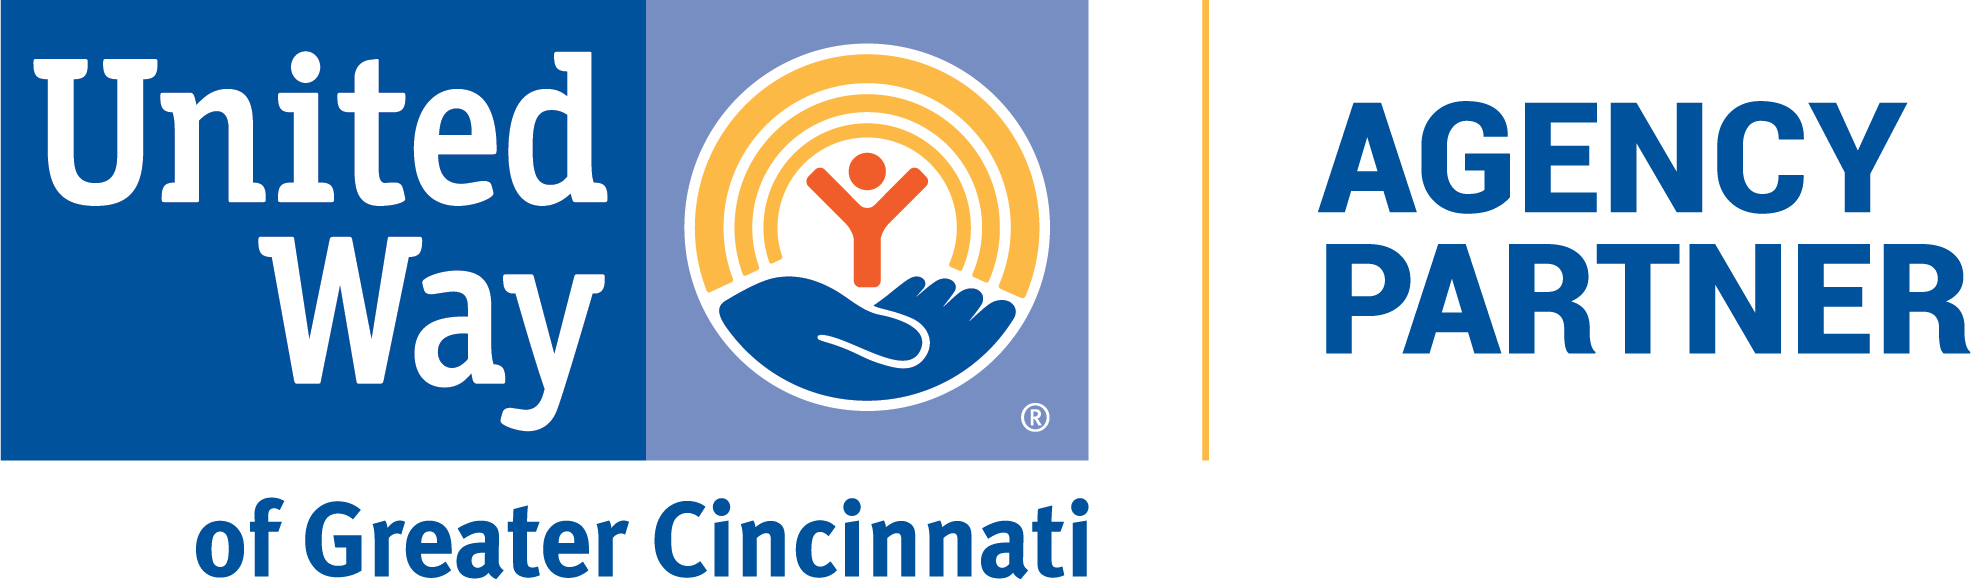 United Way Greater Cincinnati Logo - Tools & Resources